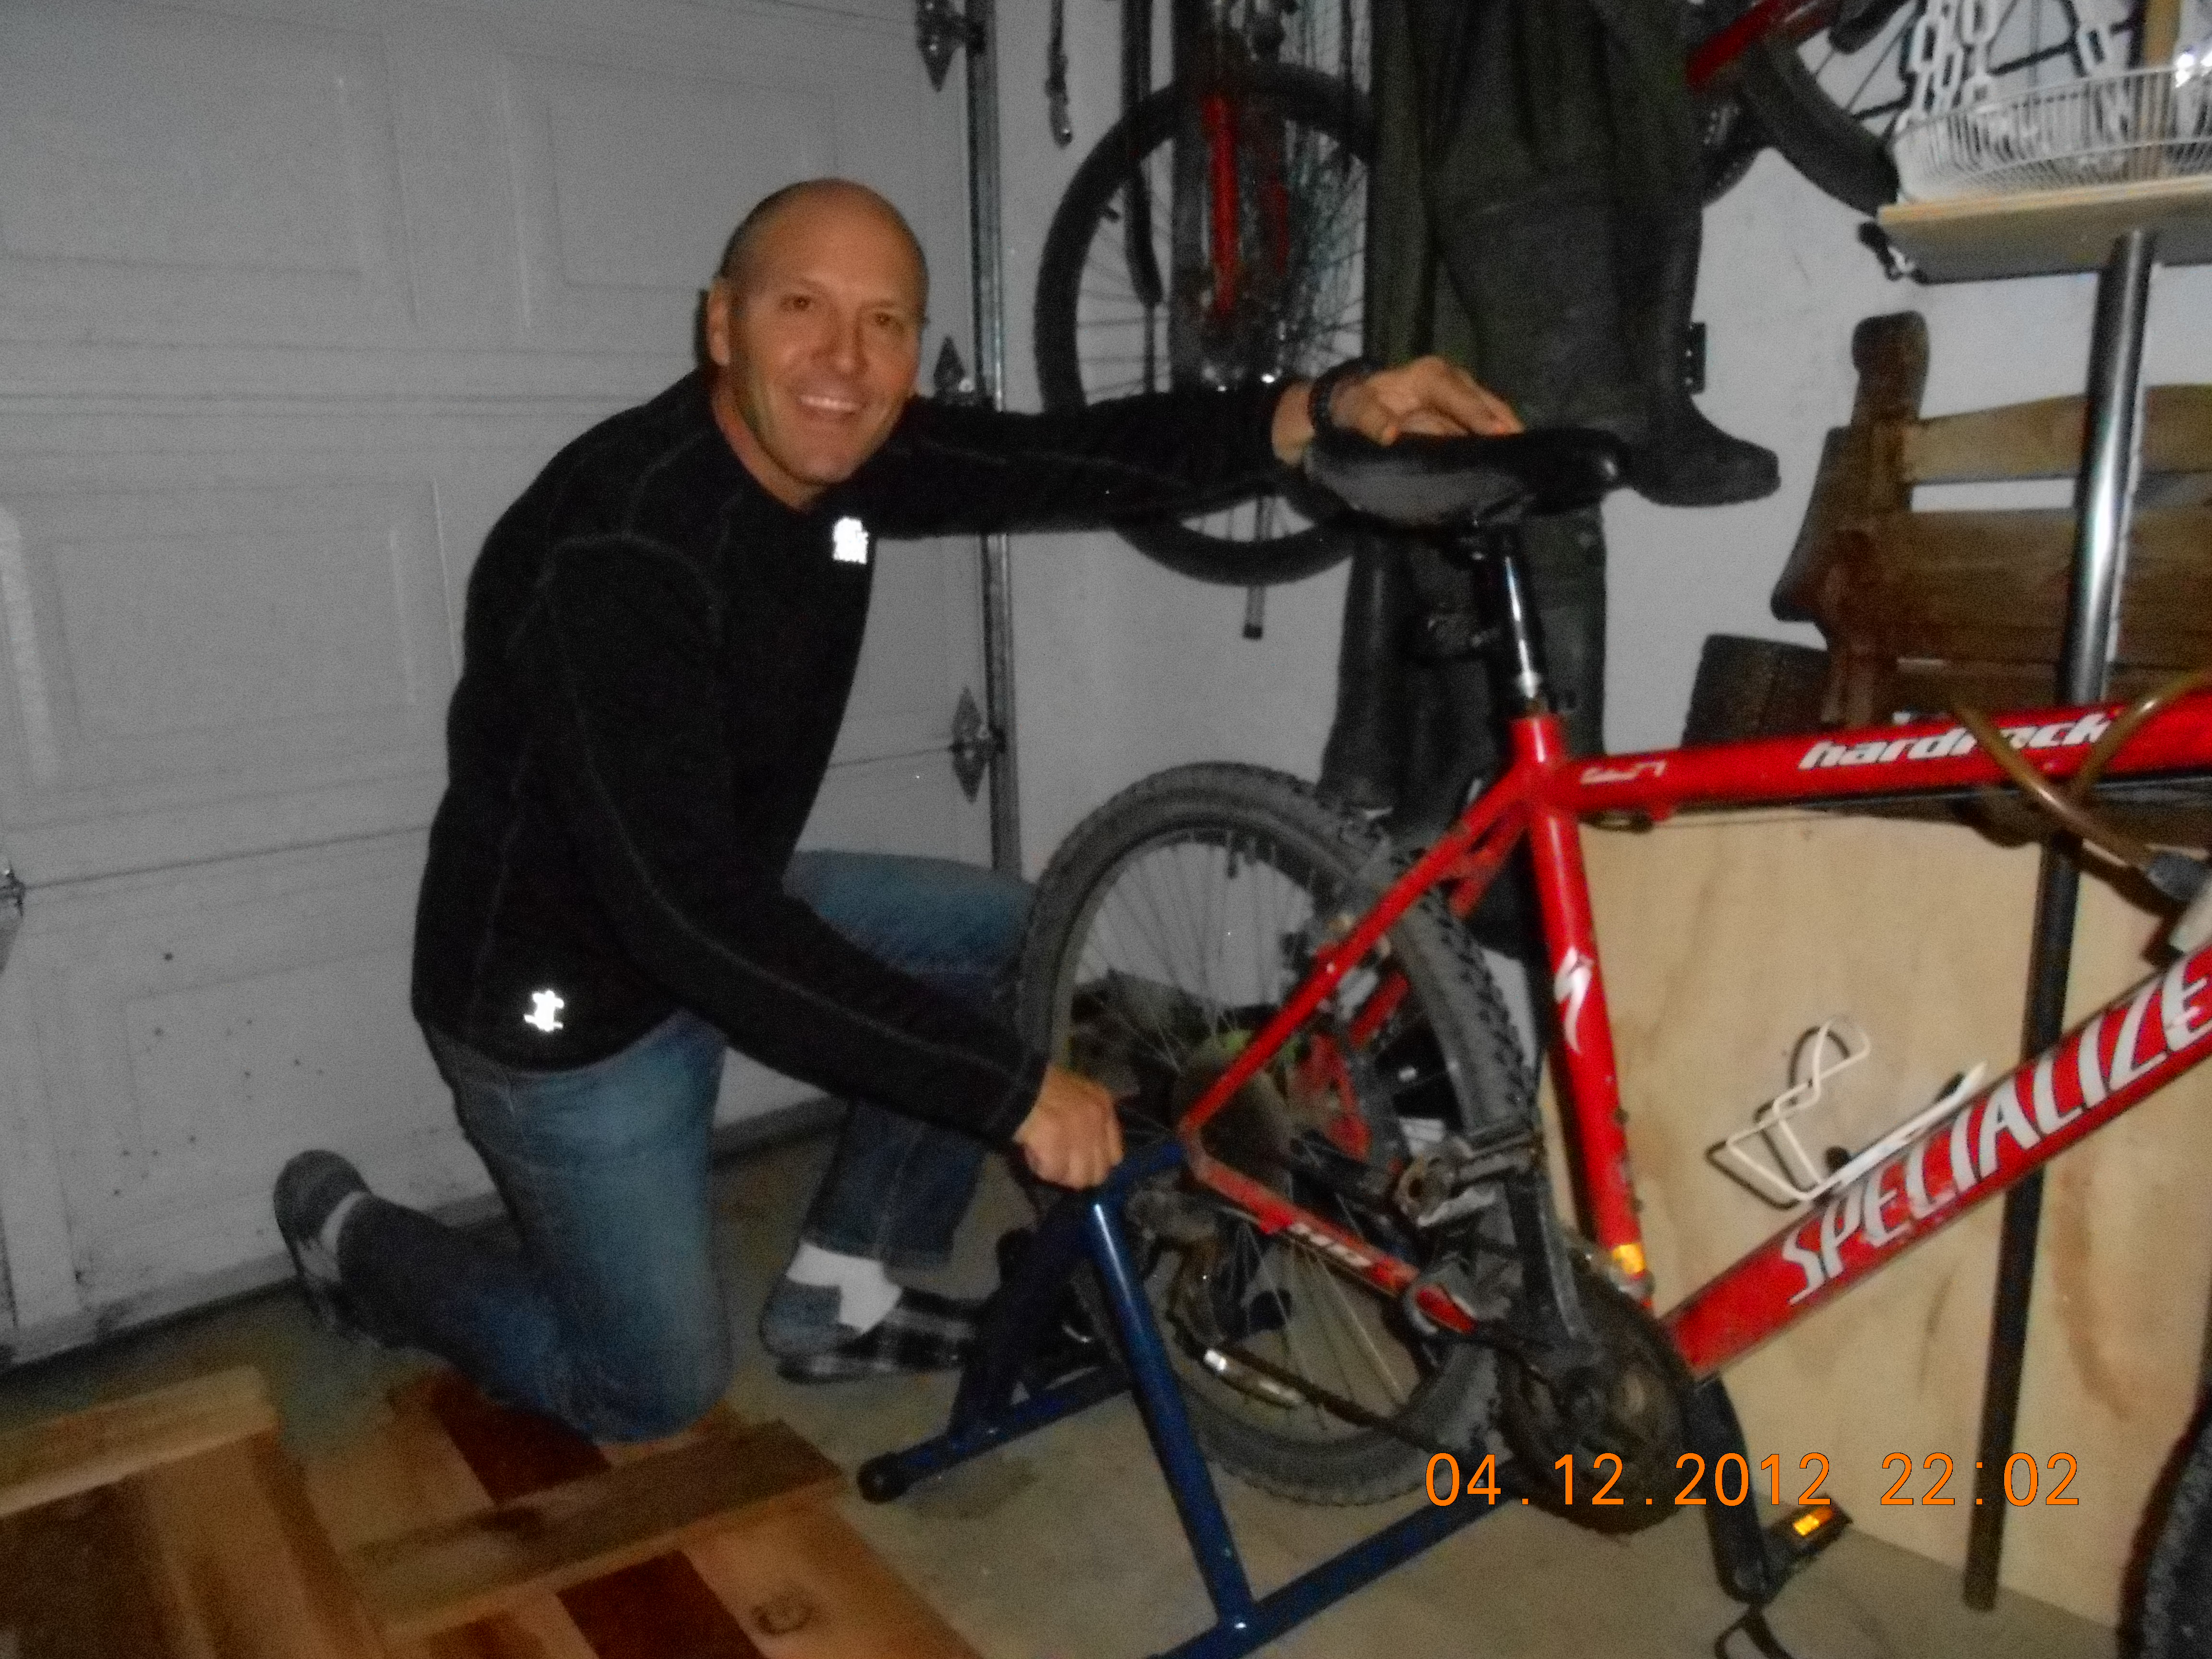 John and his indoor bike trainer